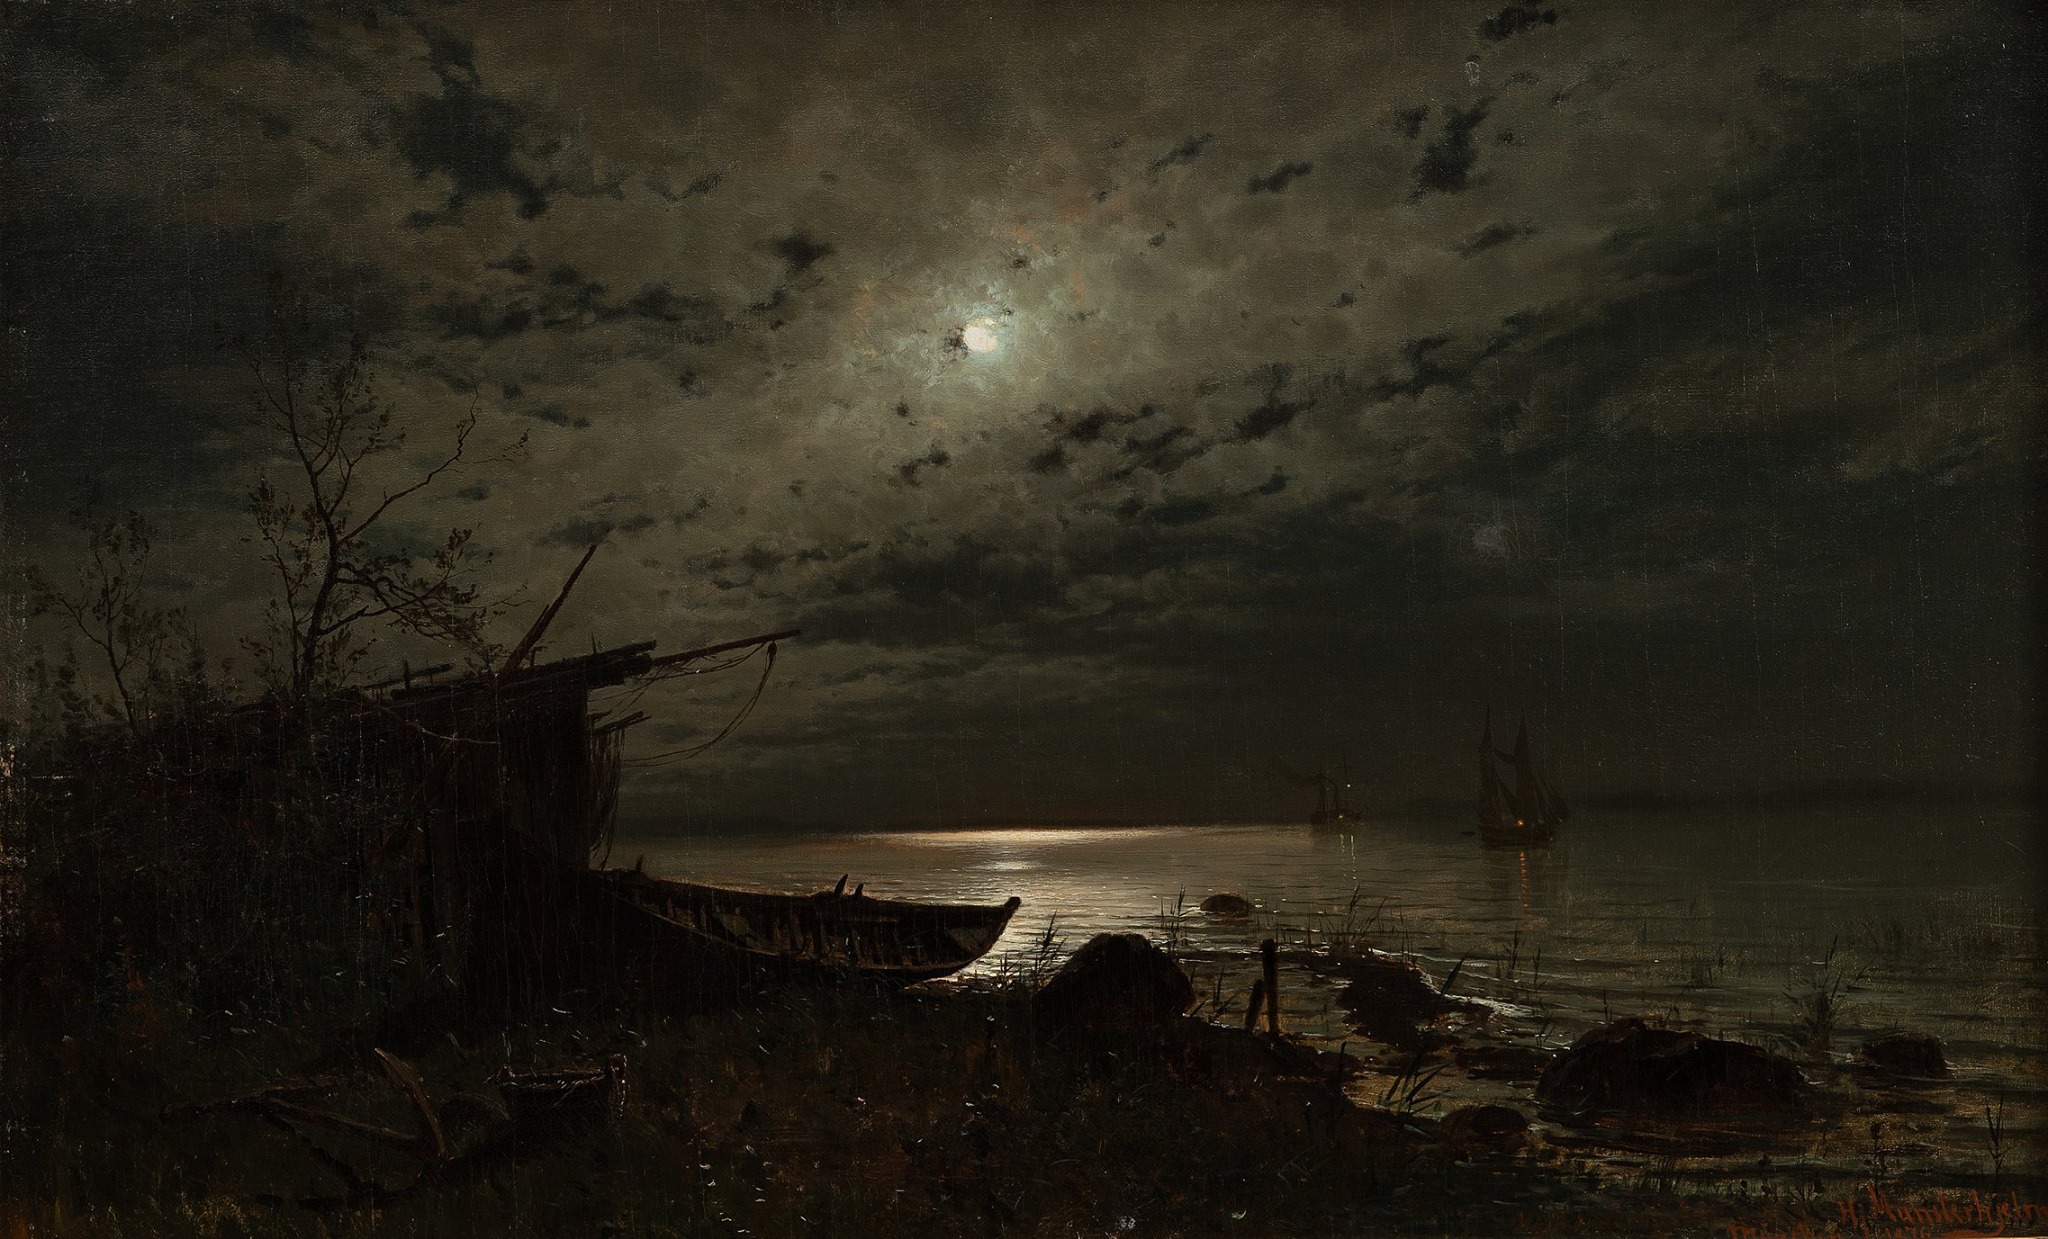 Magnus Hjalmar Munsterhjelm (Swedish-Finnish, 1840-1905), Kuunvaloa Merellä:Månsken över havet:Moonlight over the Sea (1876) Oil on canvas, 58 x 93 cm Private collection